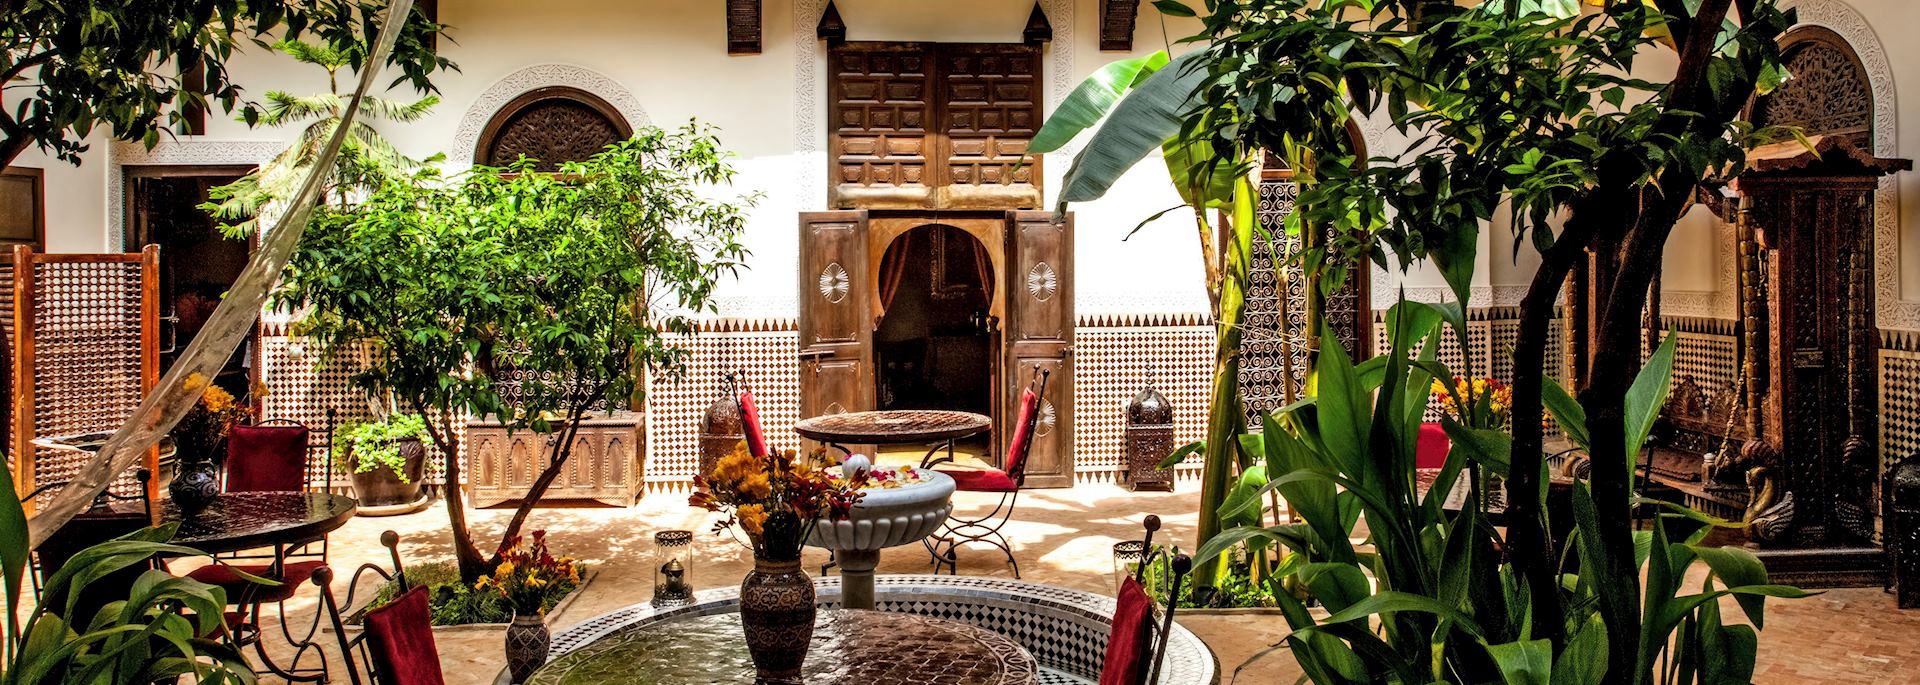 Courtyard at Riad Ilyaka, Marrakesh